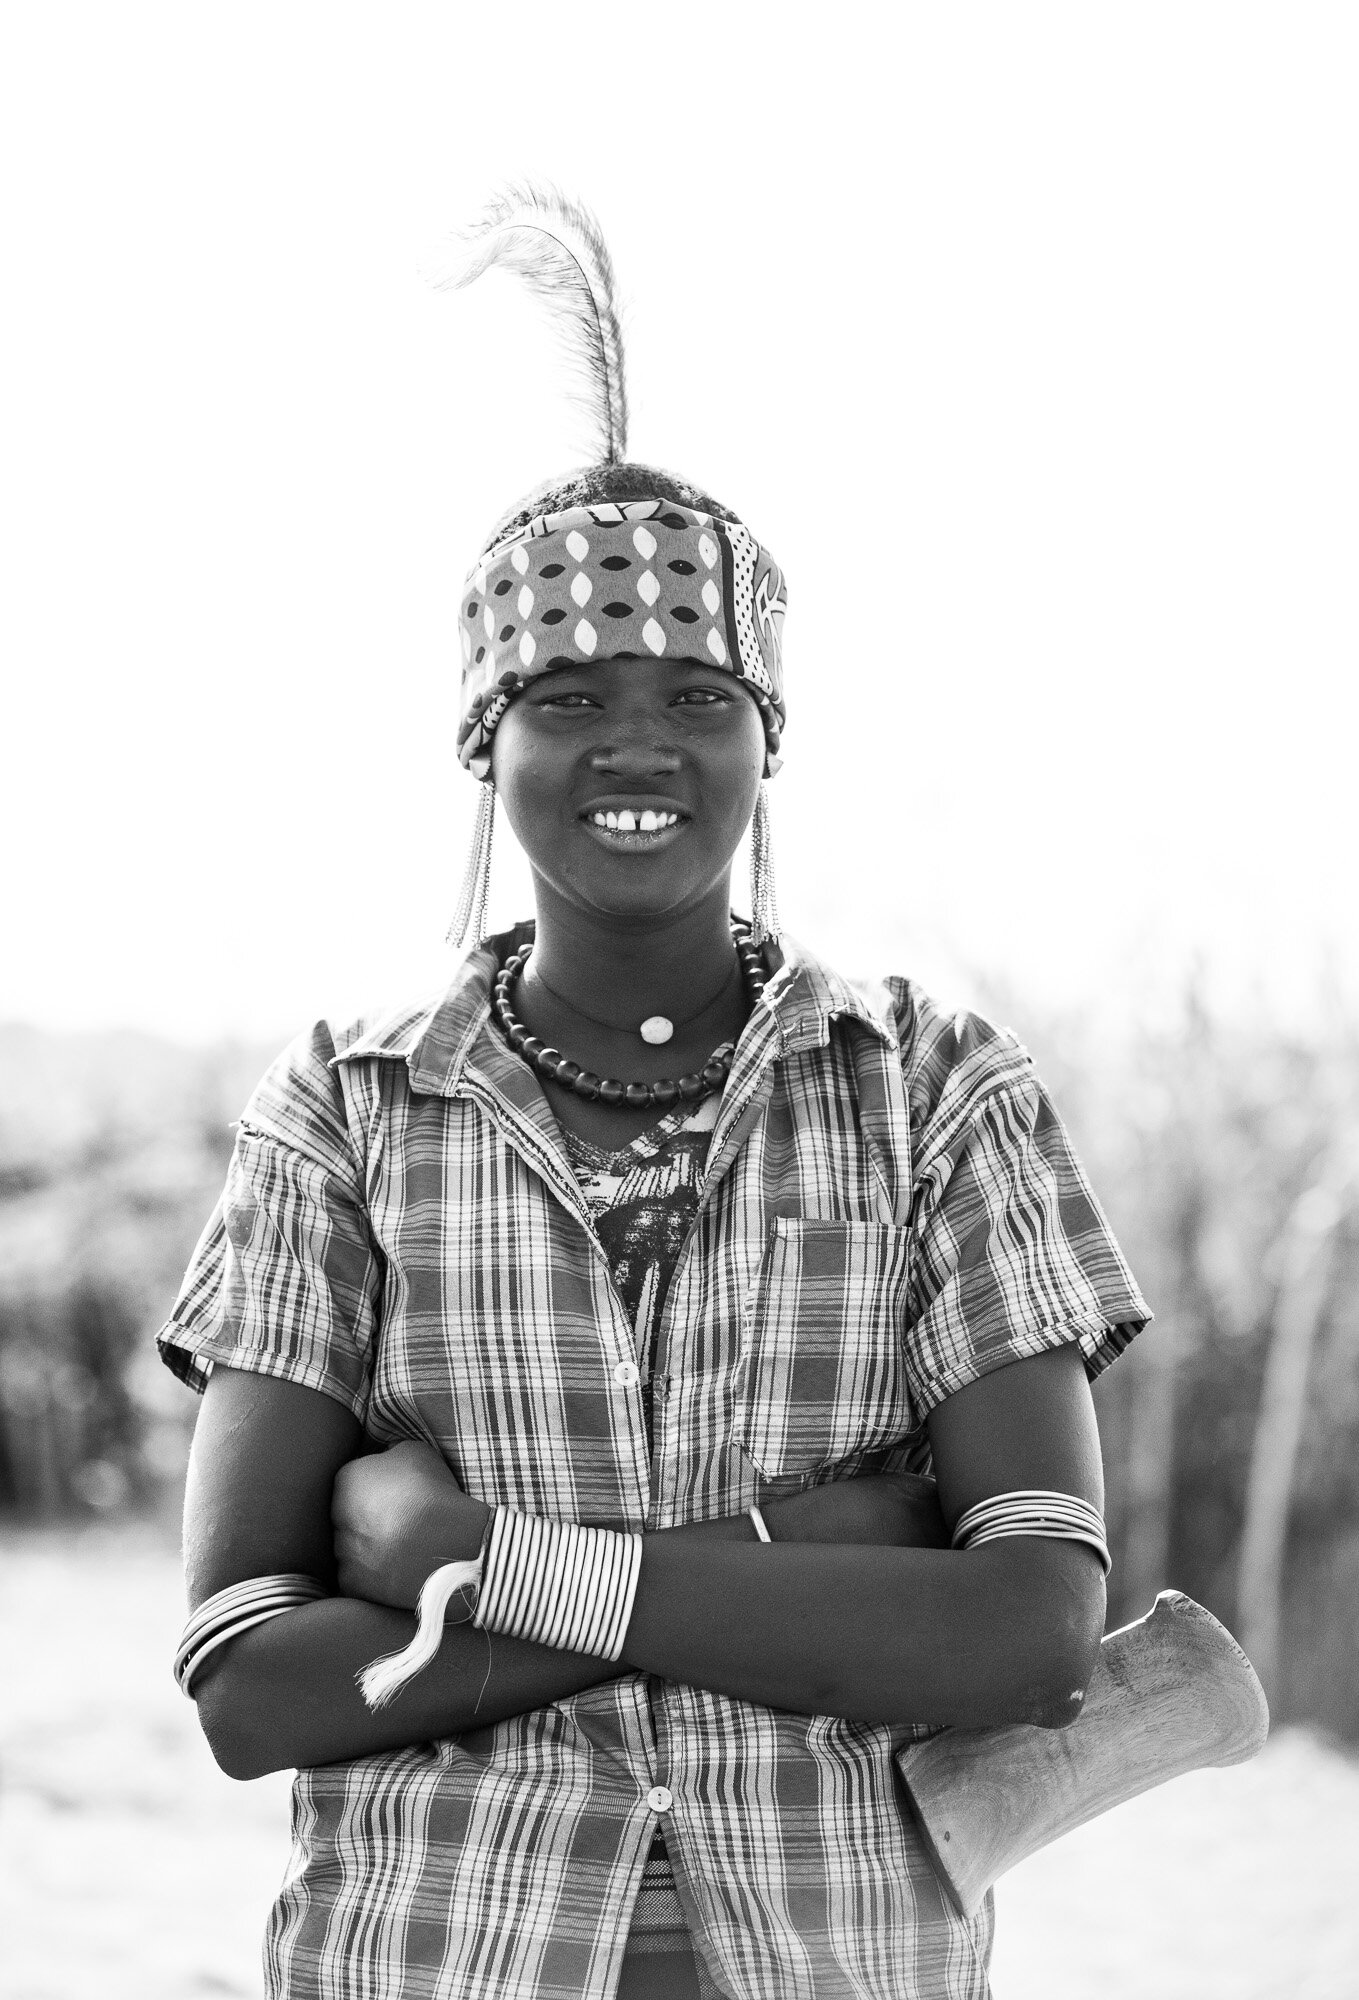 Dassanech woman portrait from Ethiopia Omo Valley tribe tour